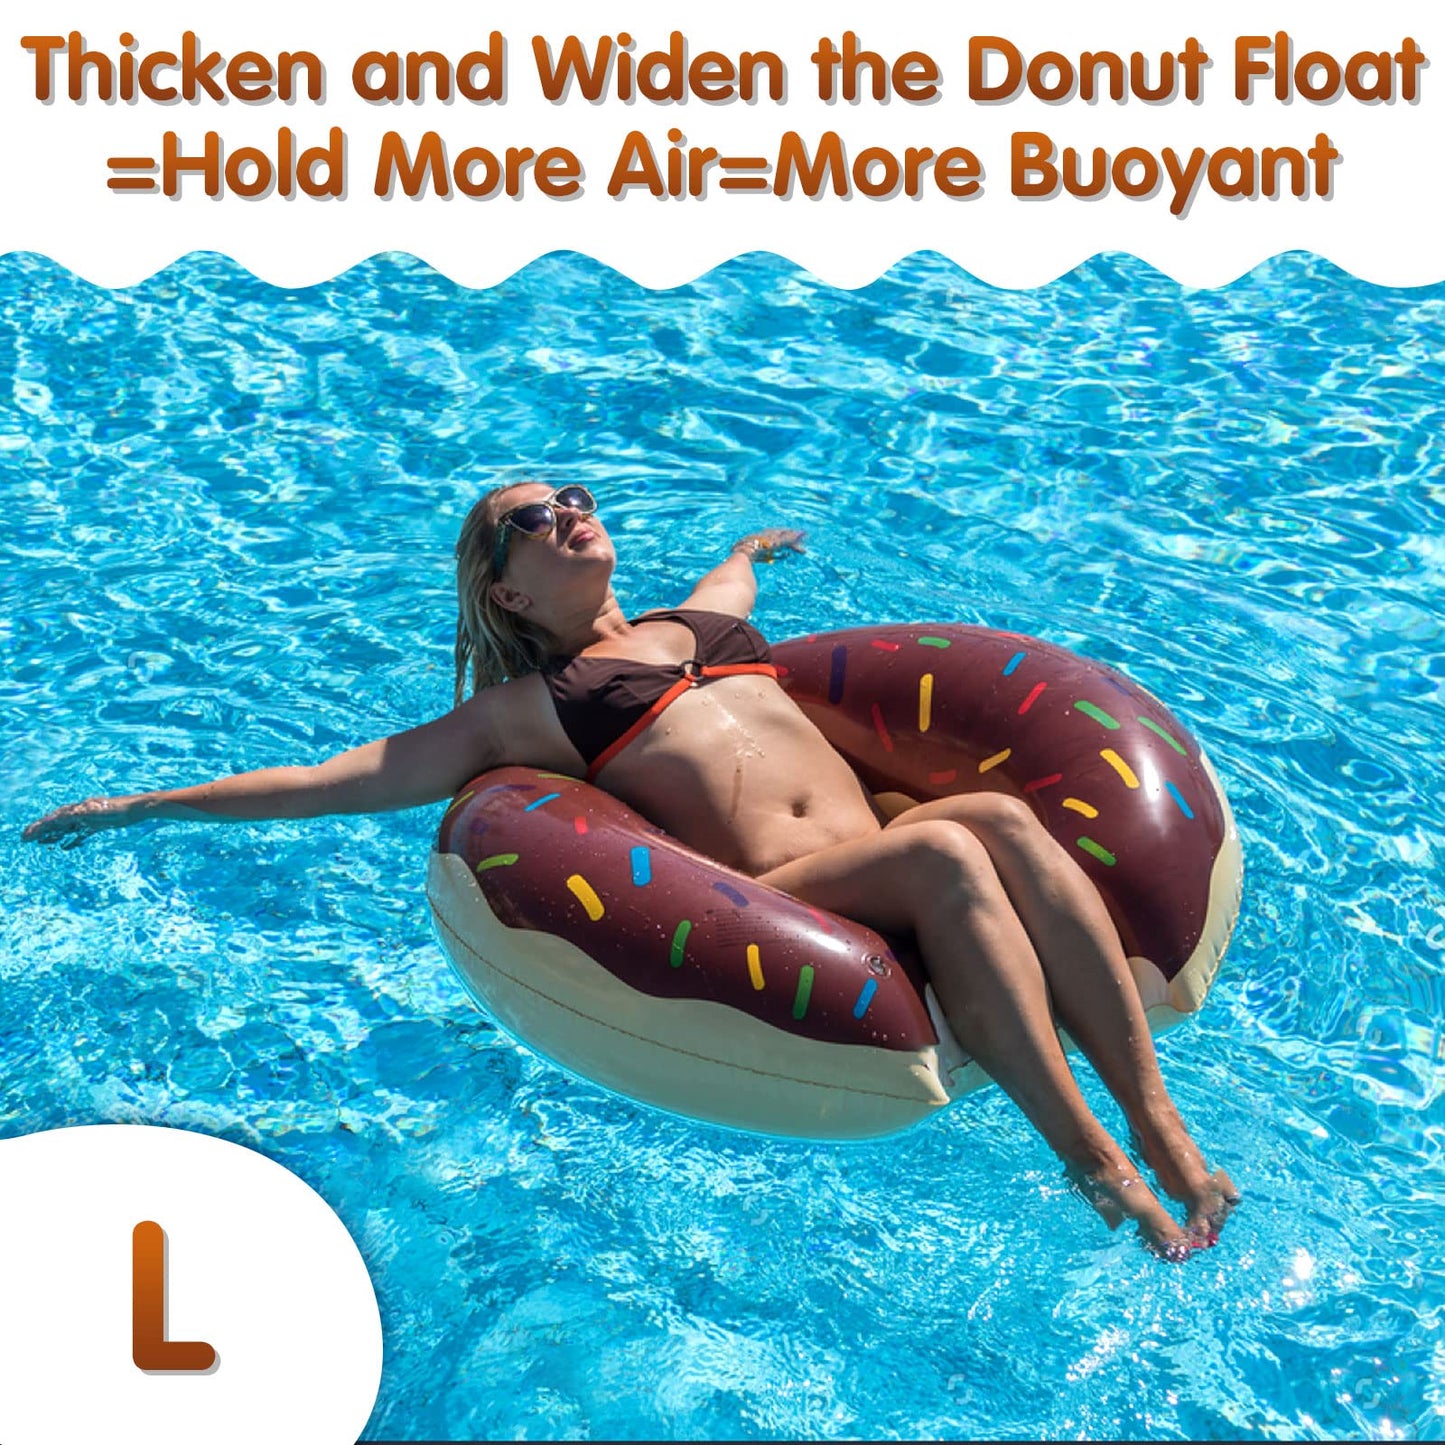 DMAR Donut Pool Floats Donut Pool Floatie Donut Tube Pool Doughnut Pool Float Donut Inflatables Doughnut Inner Tube Doughnut Pool Floatie Donut Pool Ring Donut Swimming Ring for Beach Pool #7 41in Chocolate Brown